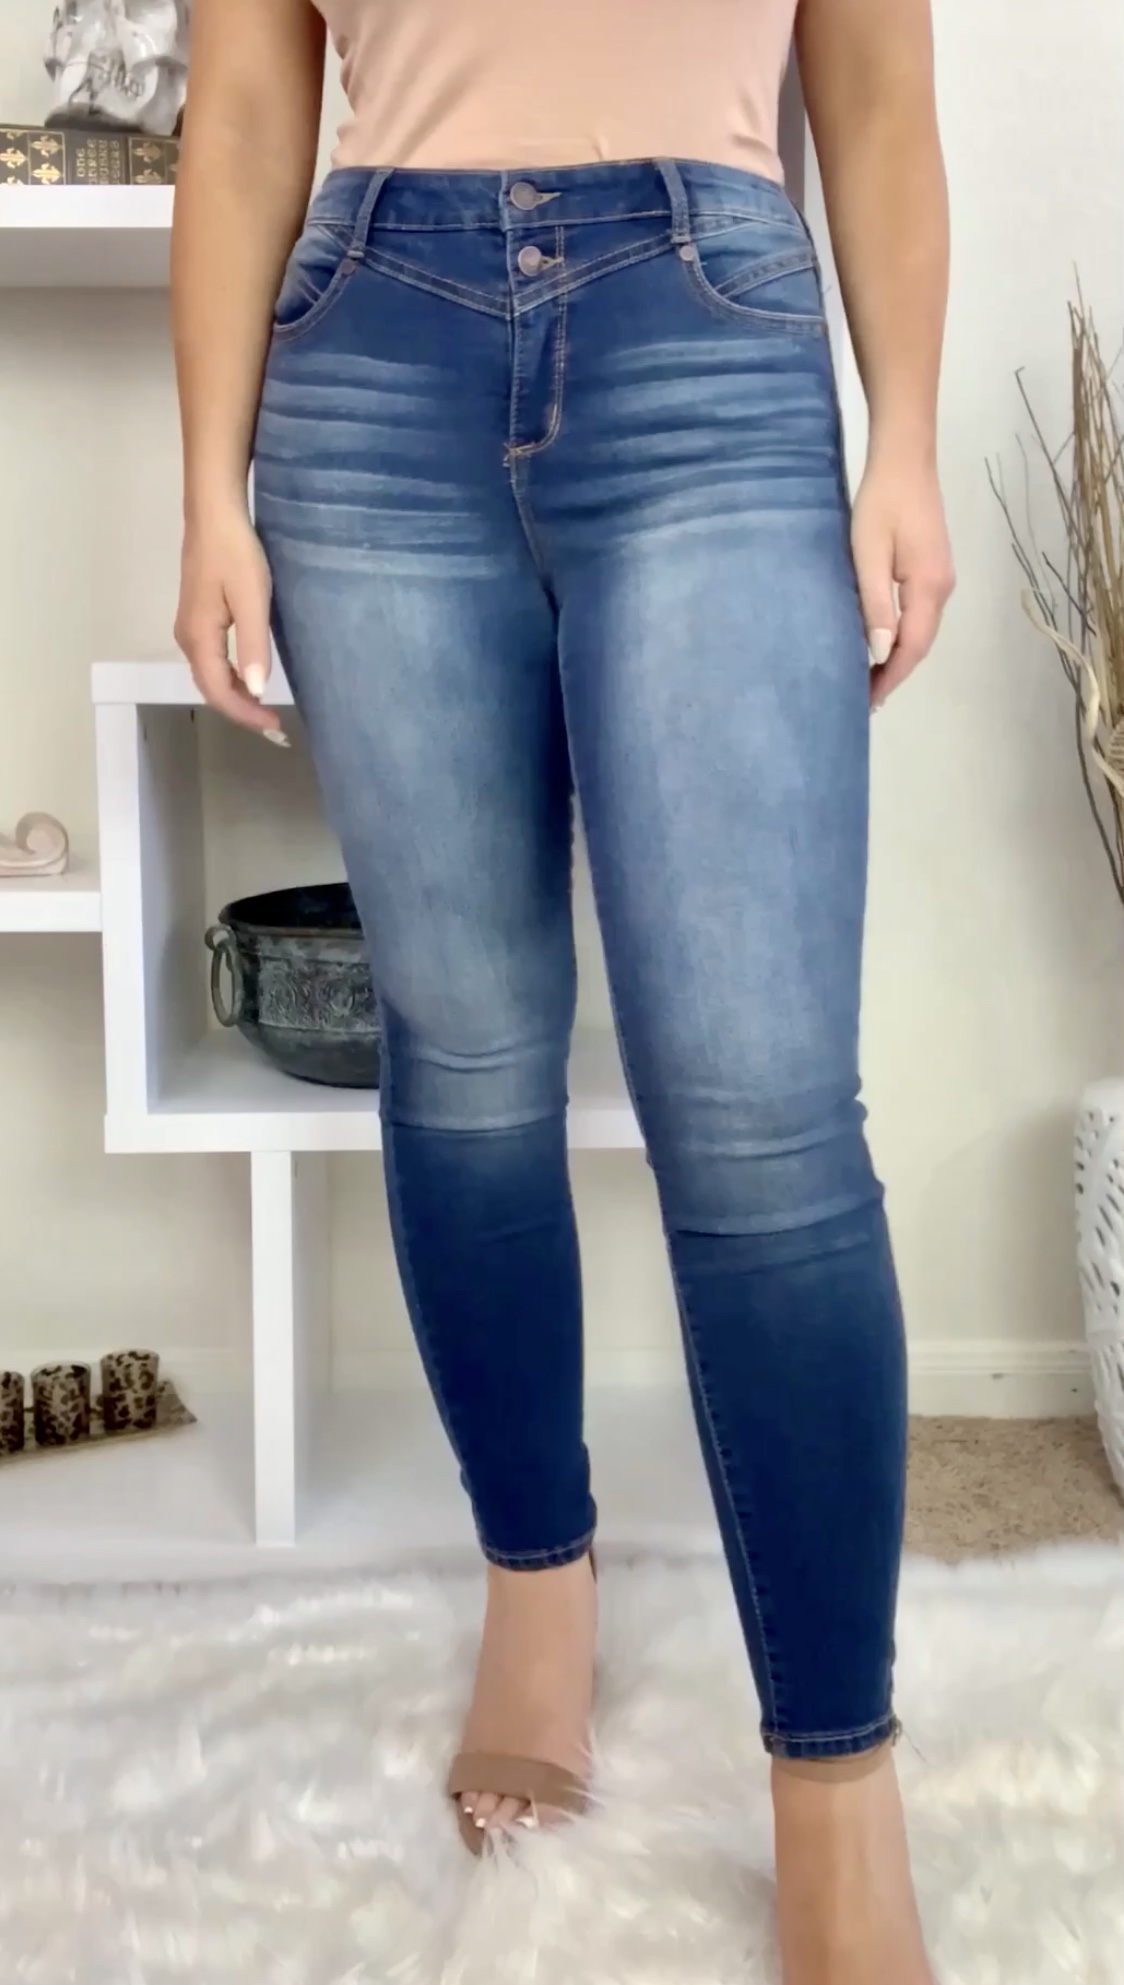 Sofia Vergara Check Boot Cut Jeans for Women